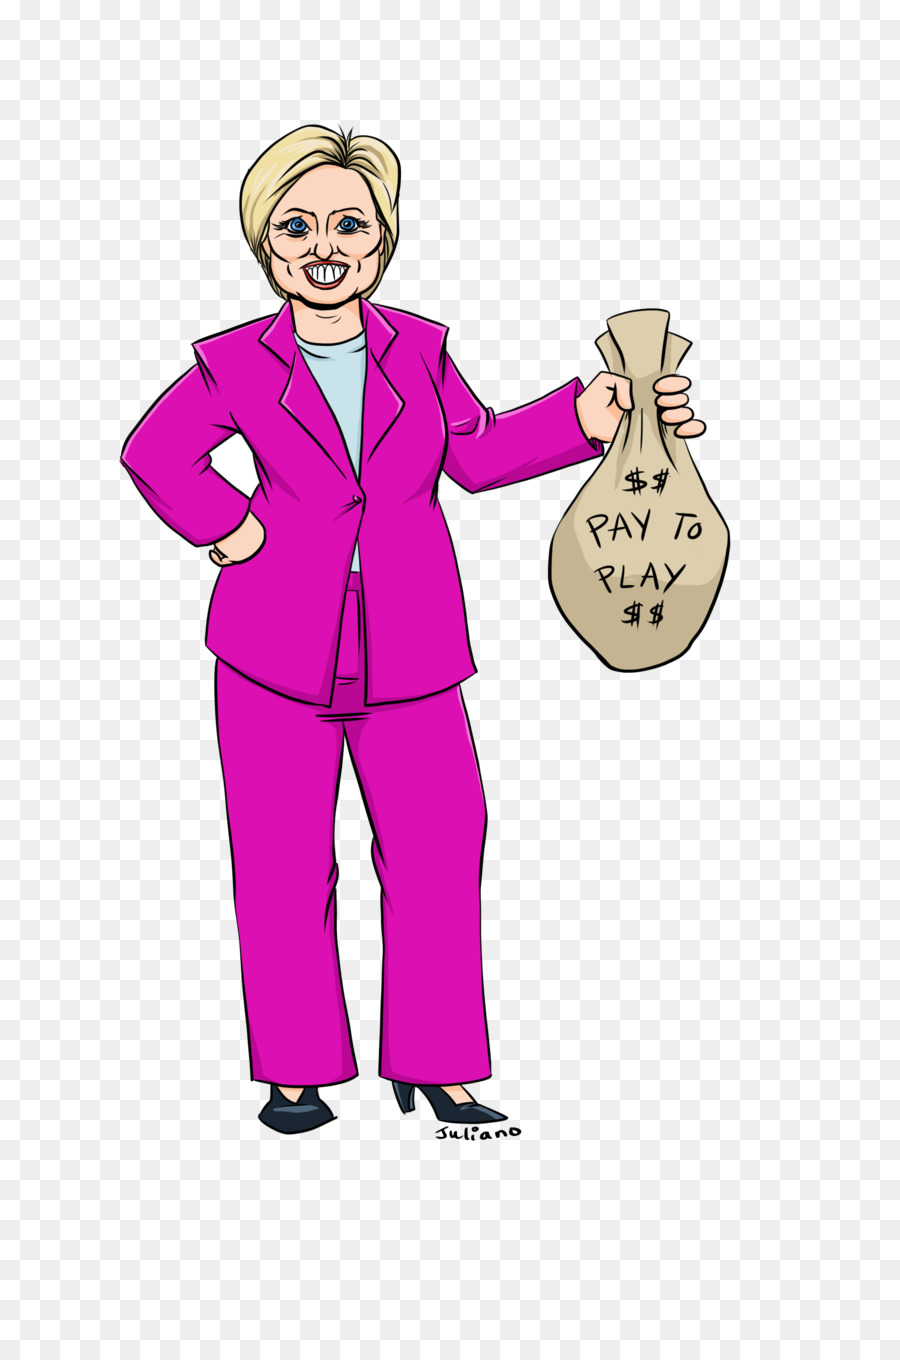 Hillary Clinton，Pagar Para Jogar PNG